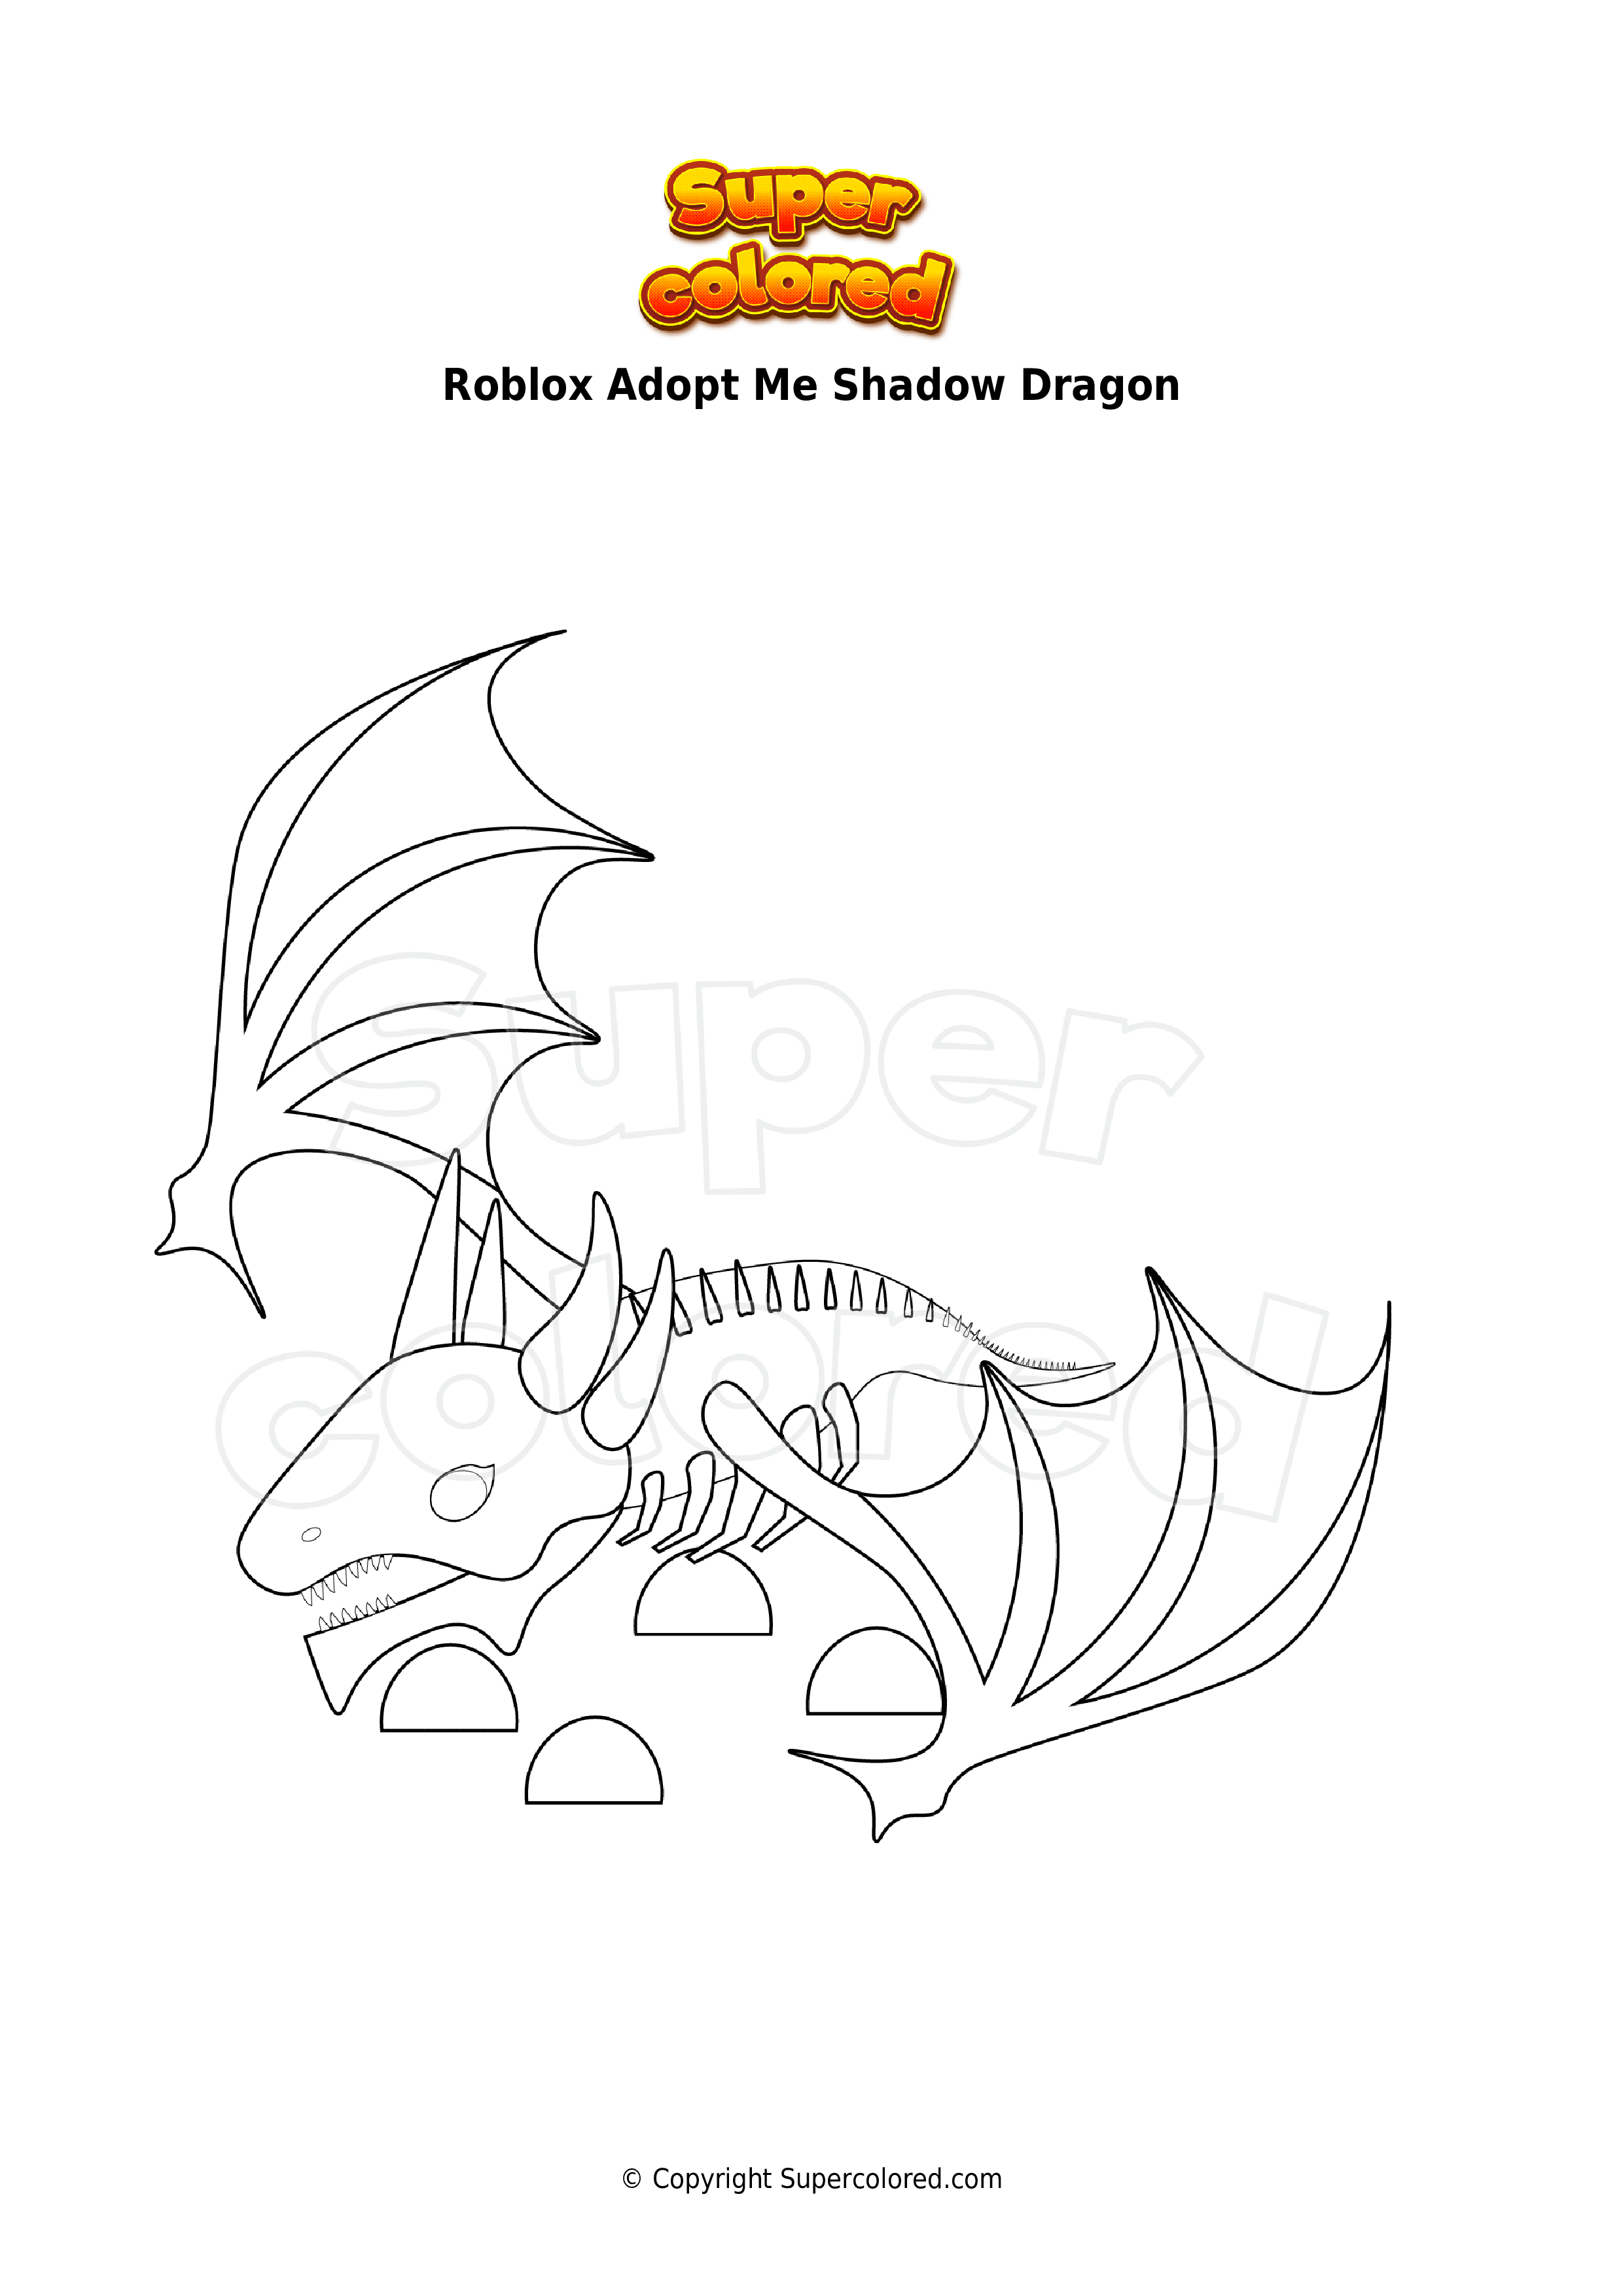 Coloring Page Roblox Adopt Me Shadow Dragon Supercolored Com - roblox adopt me shadow dragon